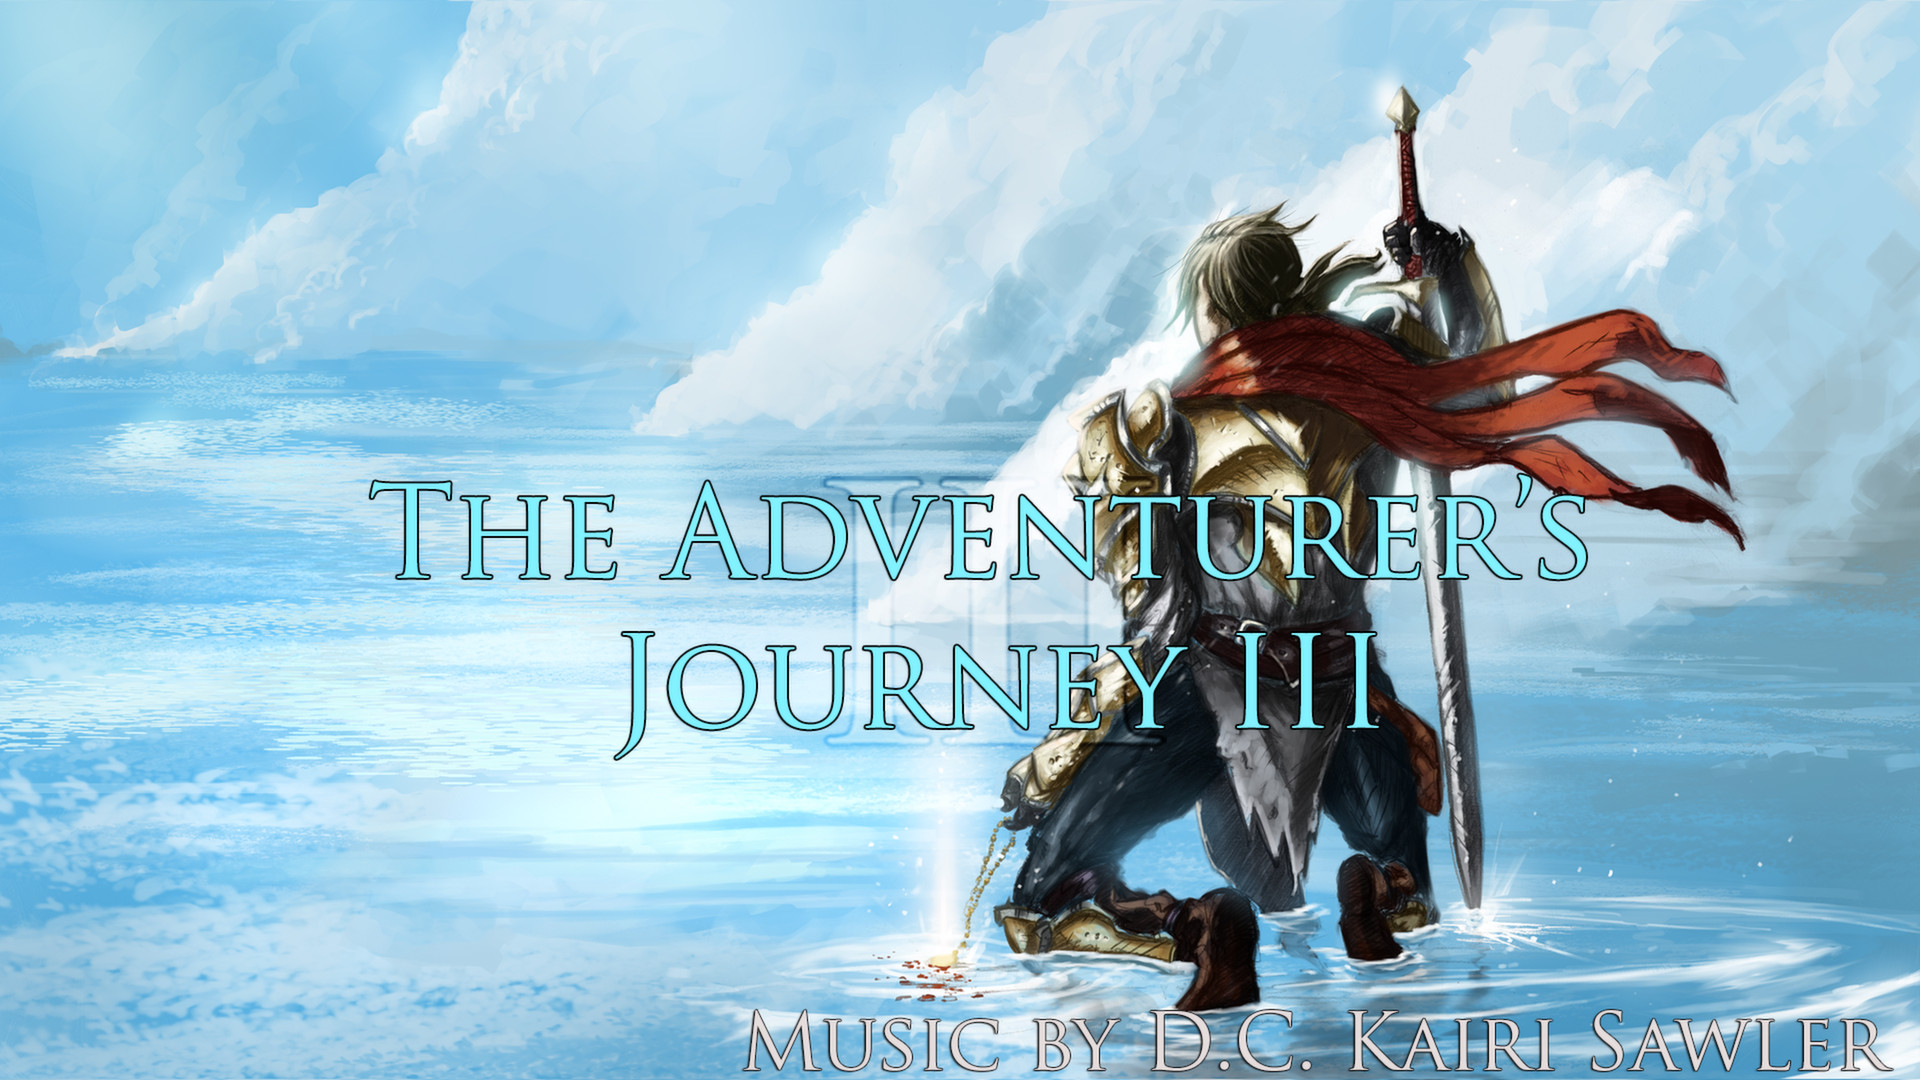 (4.51$) RPG Maker VX Ace - The Adventurer's Journey III DLC Steam CD Key